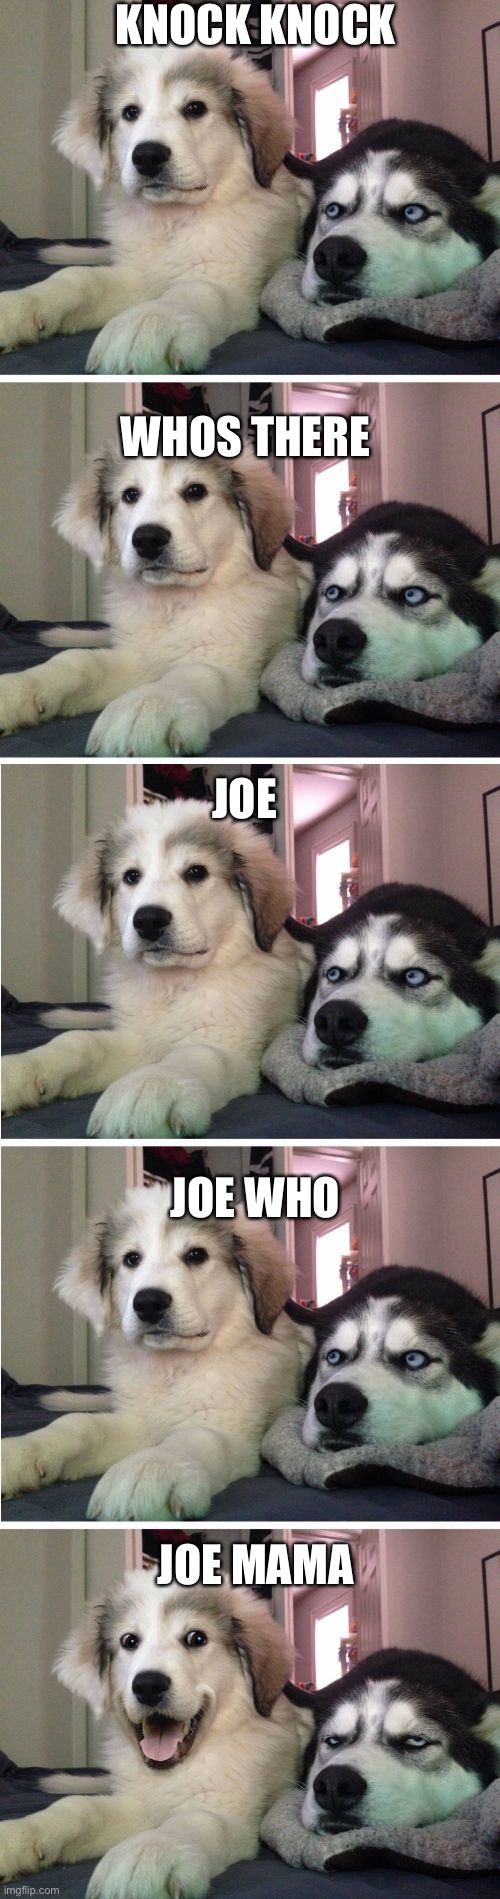 Knock Knock Dogs | KNOCK KNOCK; WHOS THERE; JOE; JOE WHO; JOE MAMA | image tagged in knock knock dogs | made w/ Imgflip meme maker